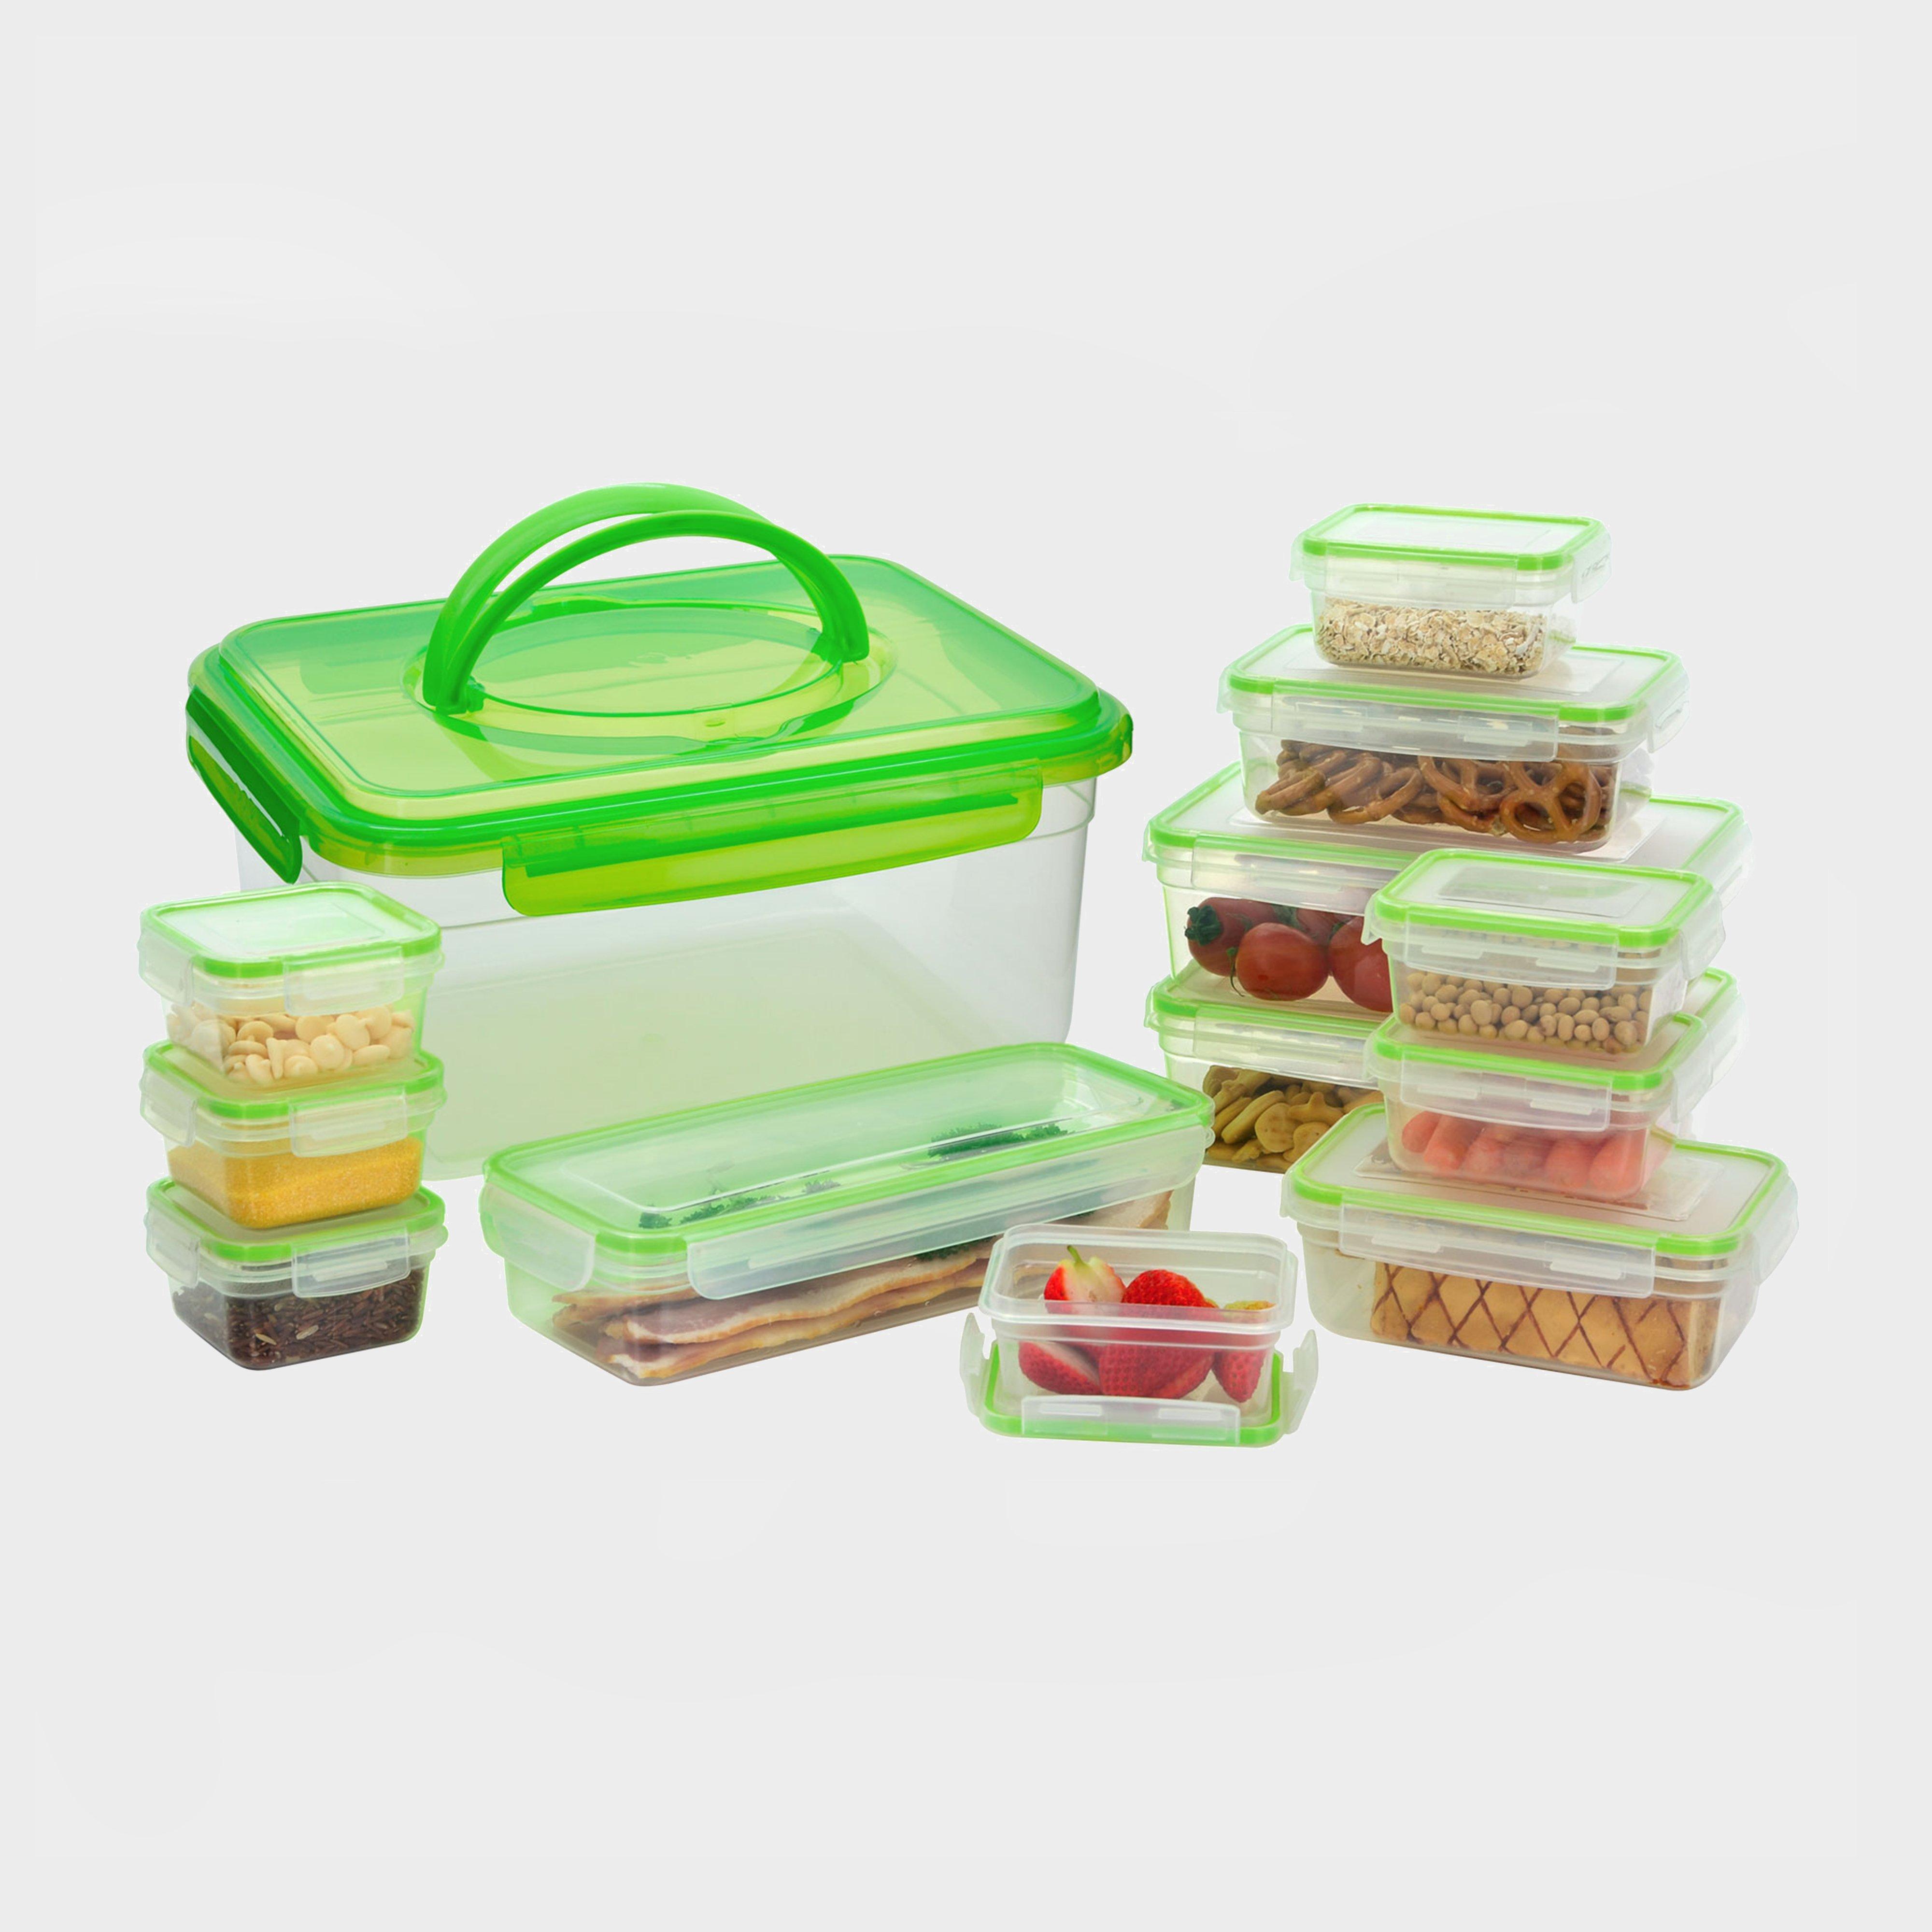 13 Piece Compact Food Storage Set - Green, Green